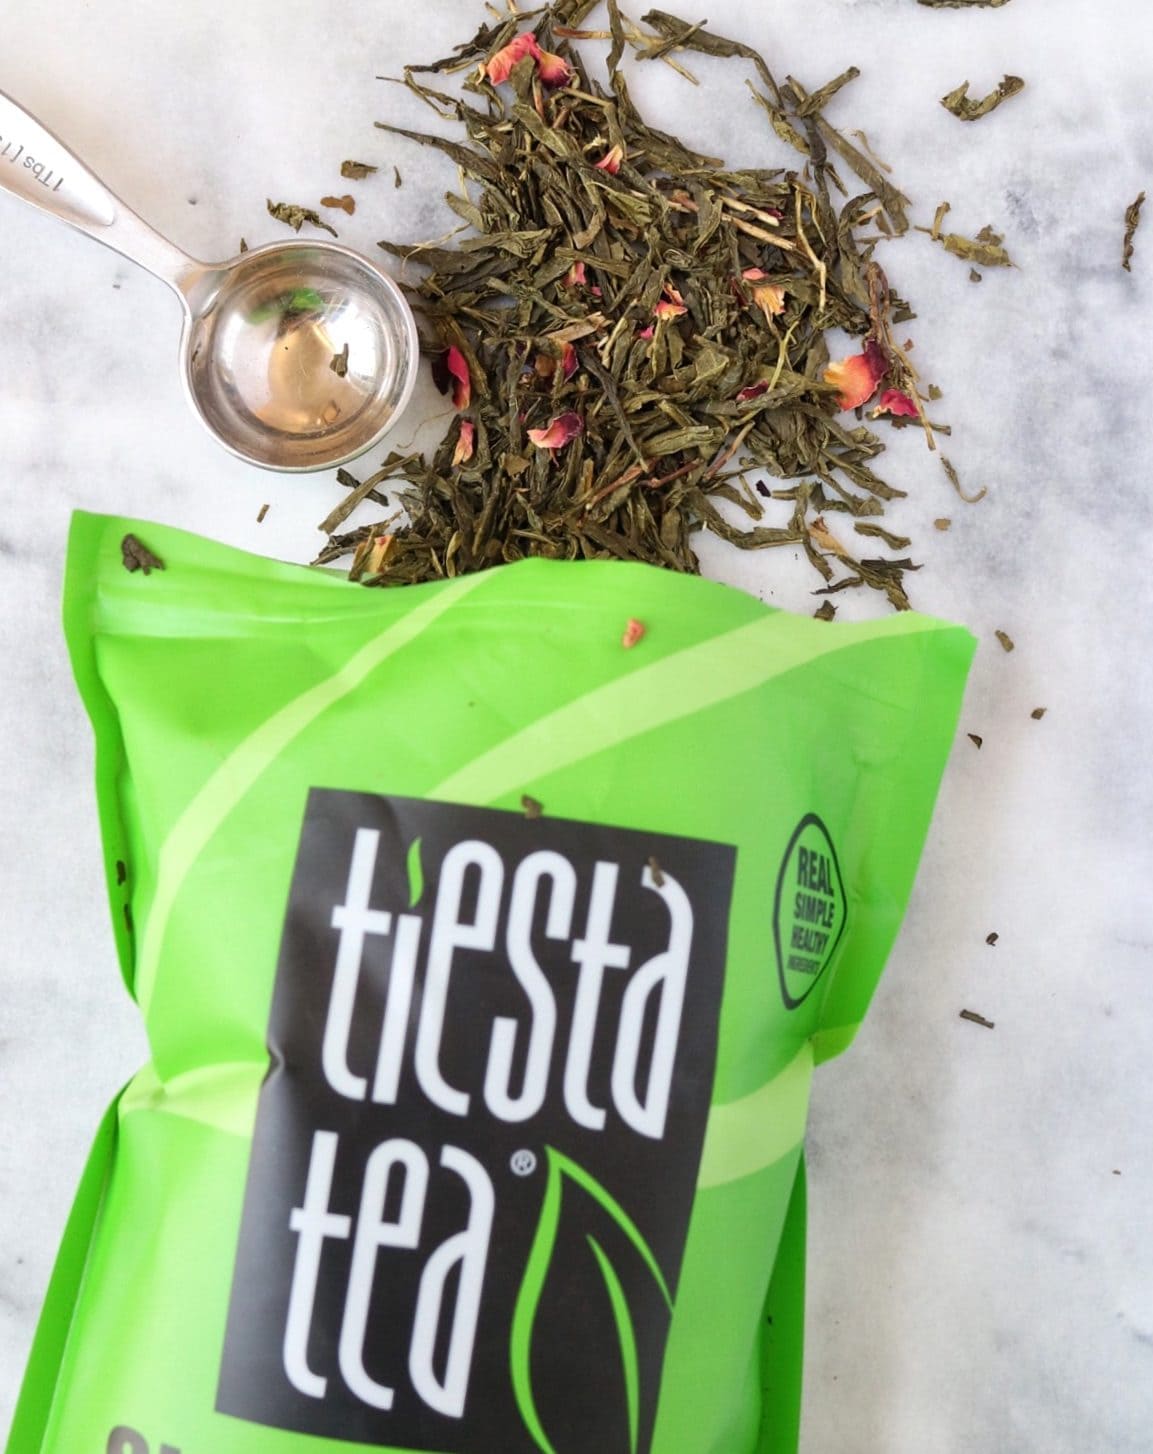 Tiesta Tea | The Nutrition Adventure